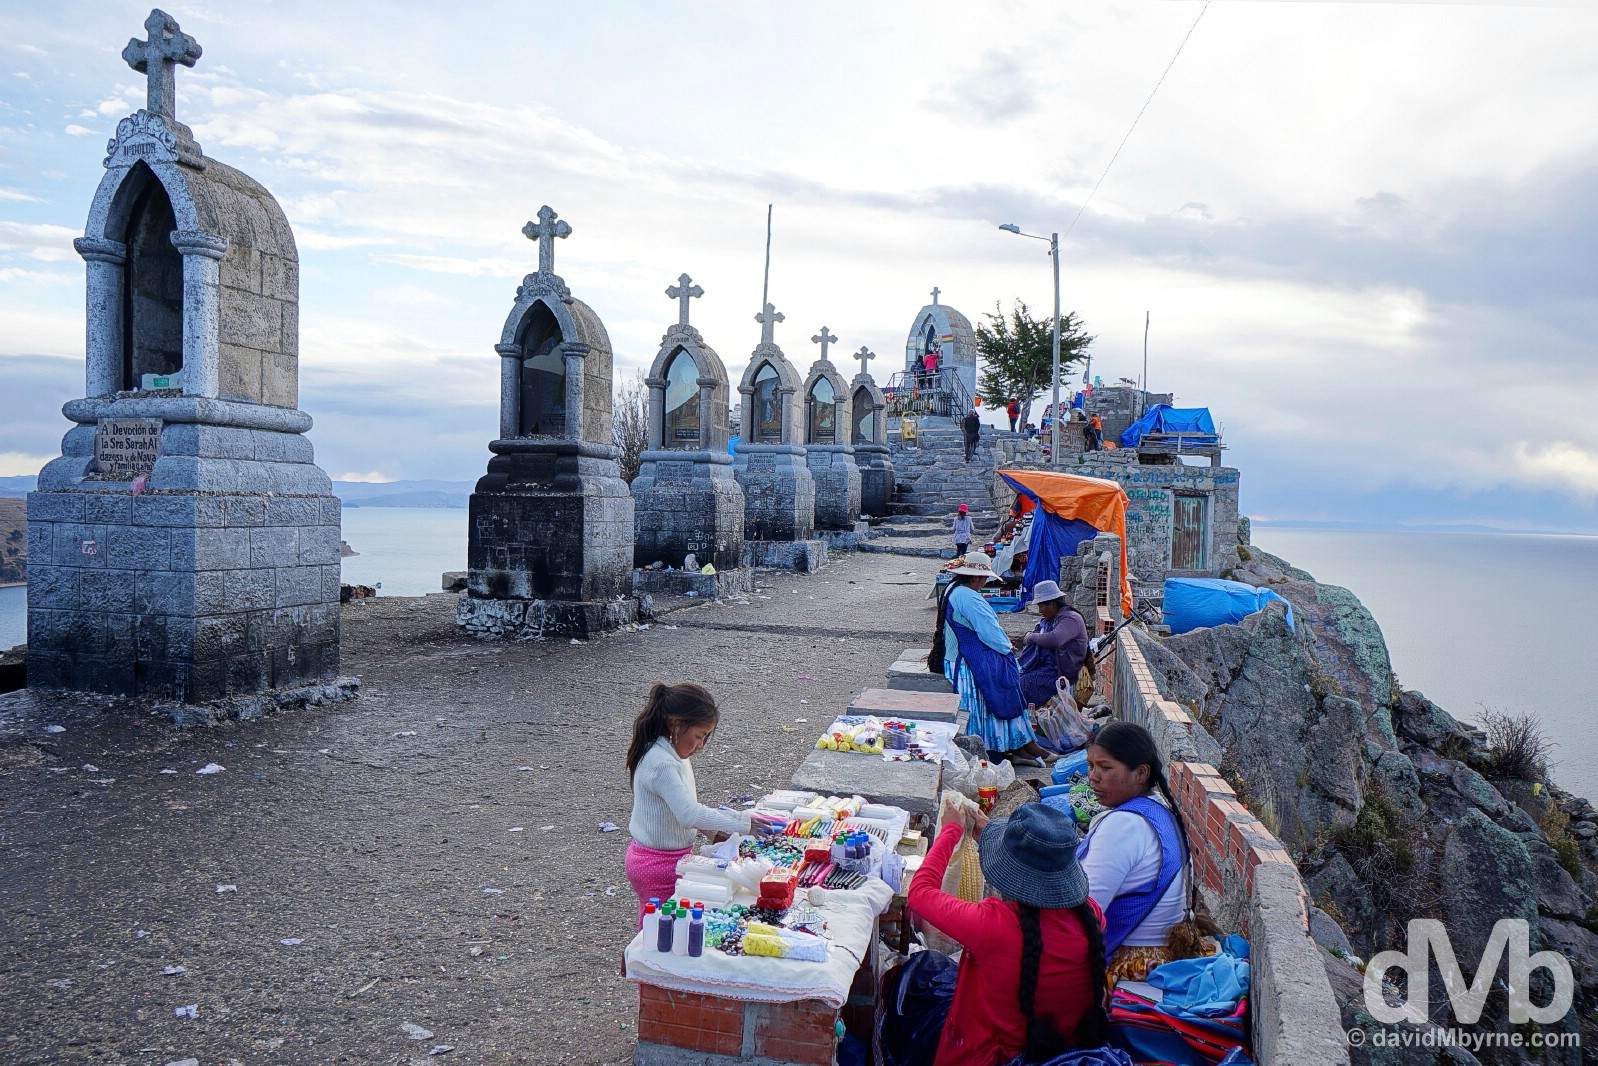 The summit of Cerro Calvario overlooking Lake Titicaca & the town of Copacabana, Bolivia. August 23, 2015. 